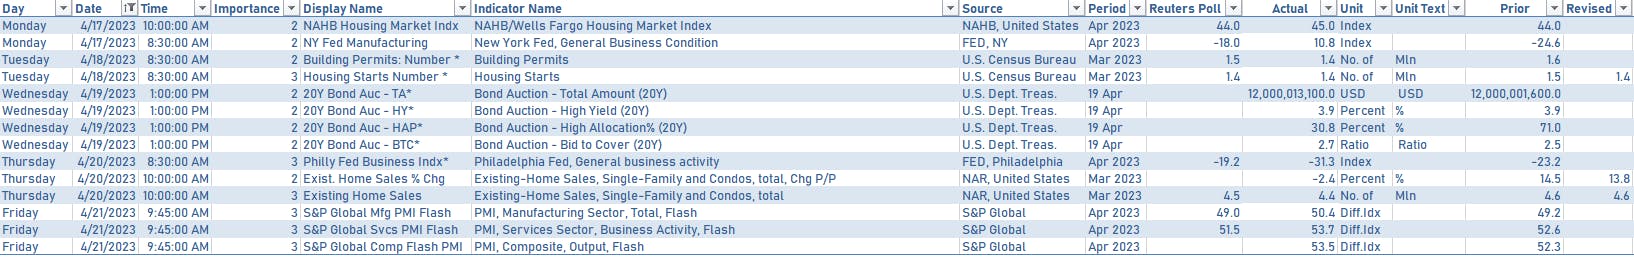 US economic data over the past week | Sources: phipost.com, Refinitiv data